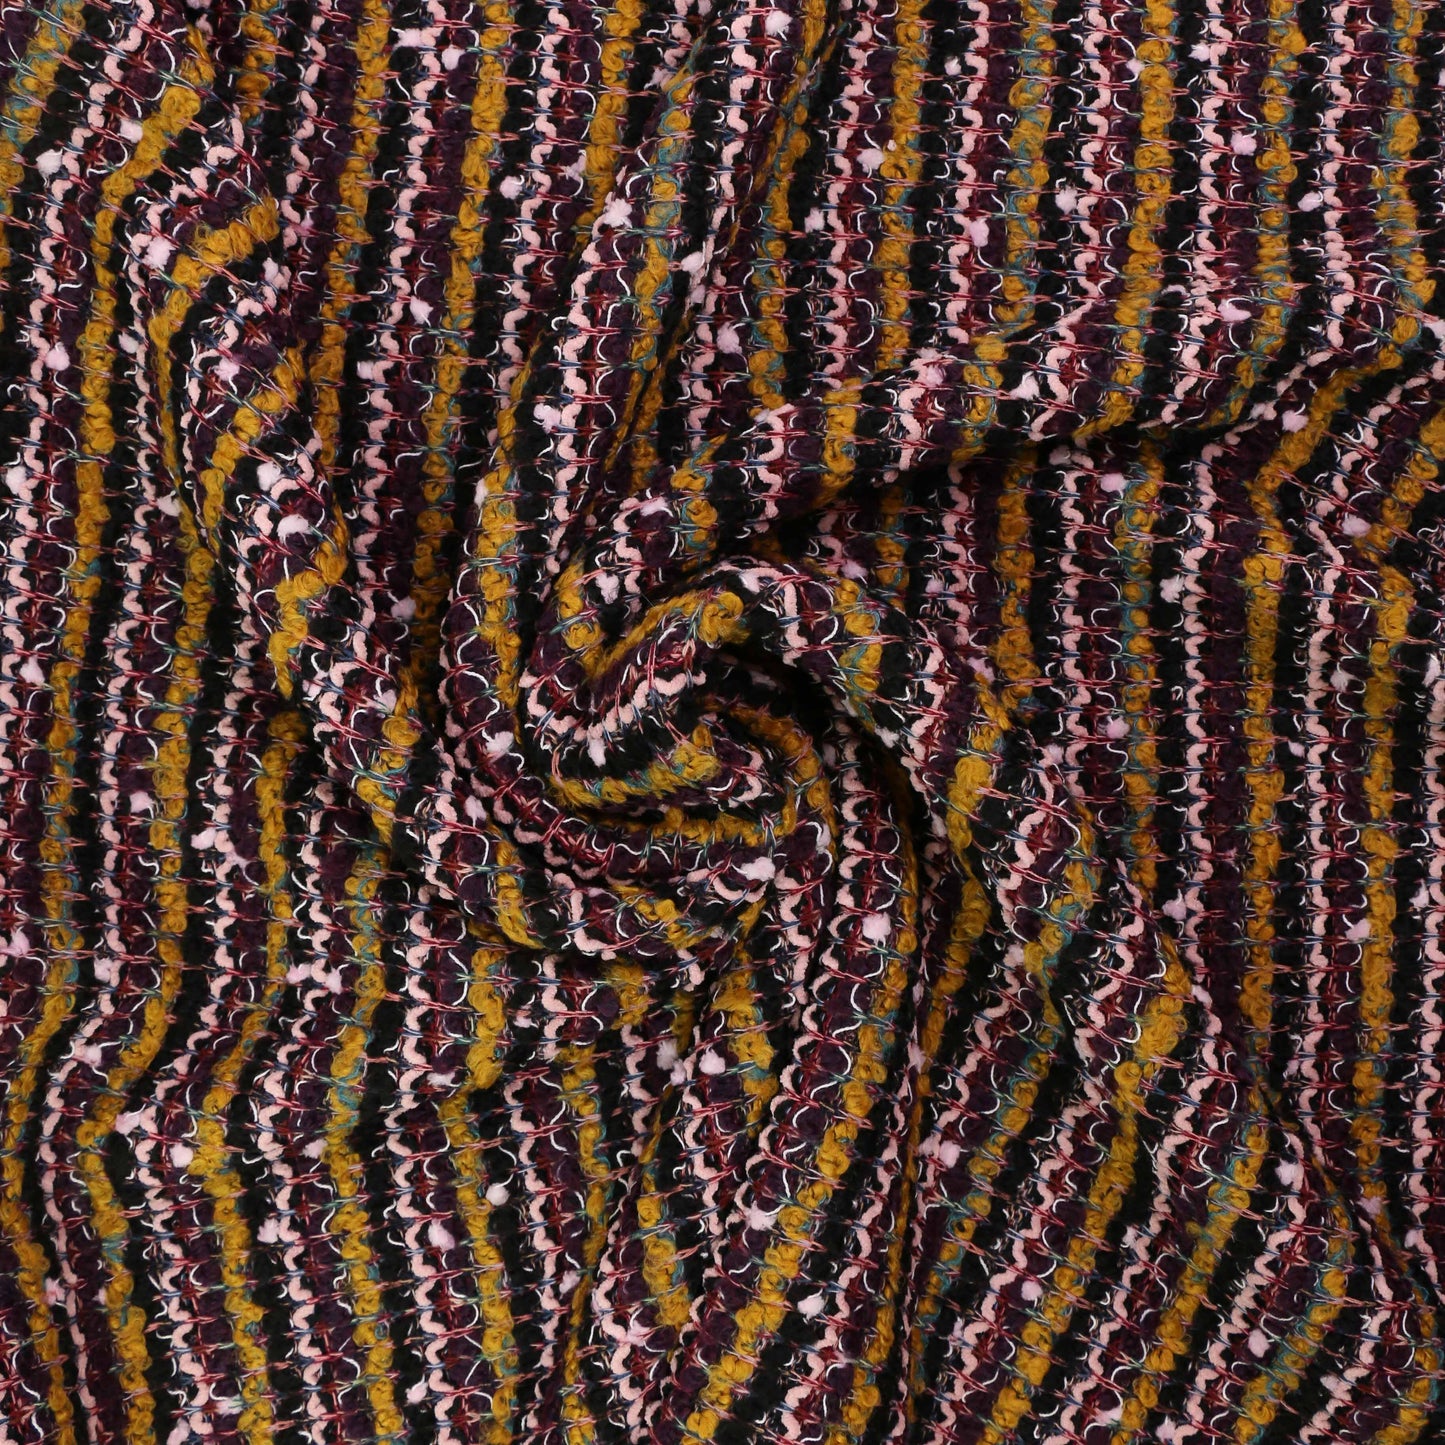 Boucle Jersey Fabric - Plum, red, mustard